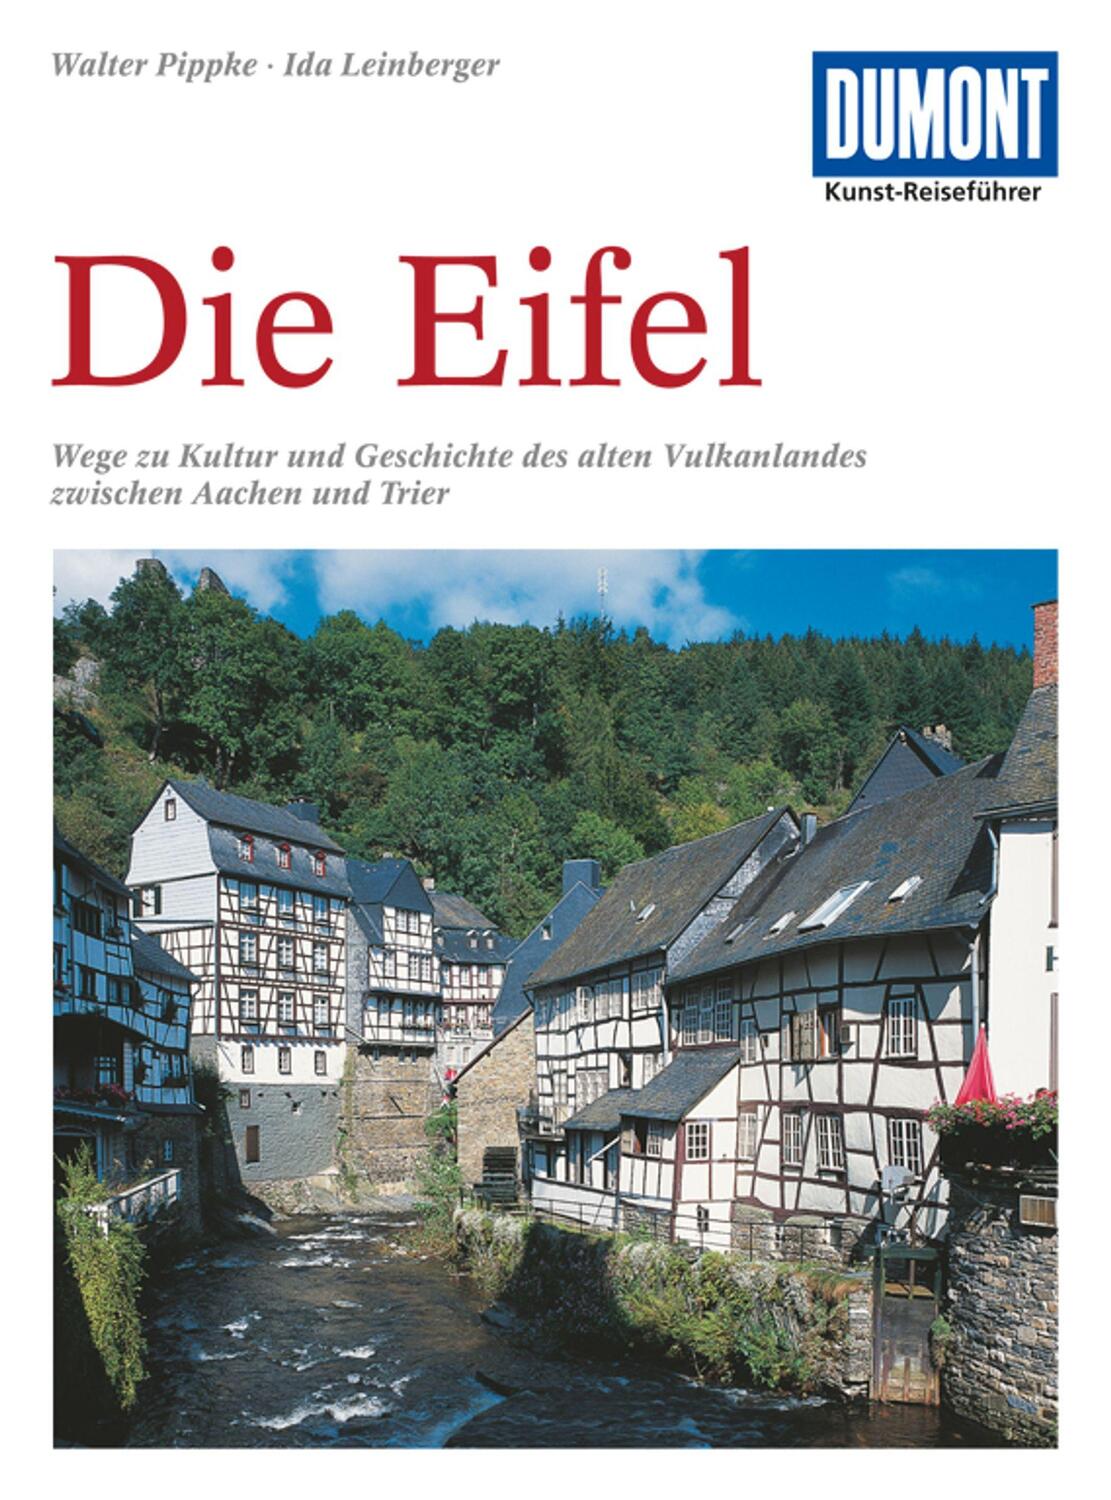 DuMont Kunst-Reiseführer Die Eifel - Pippke, Walter